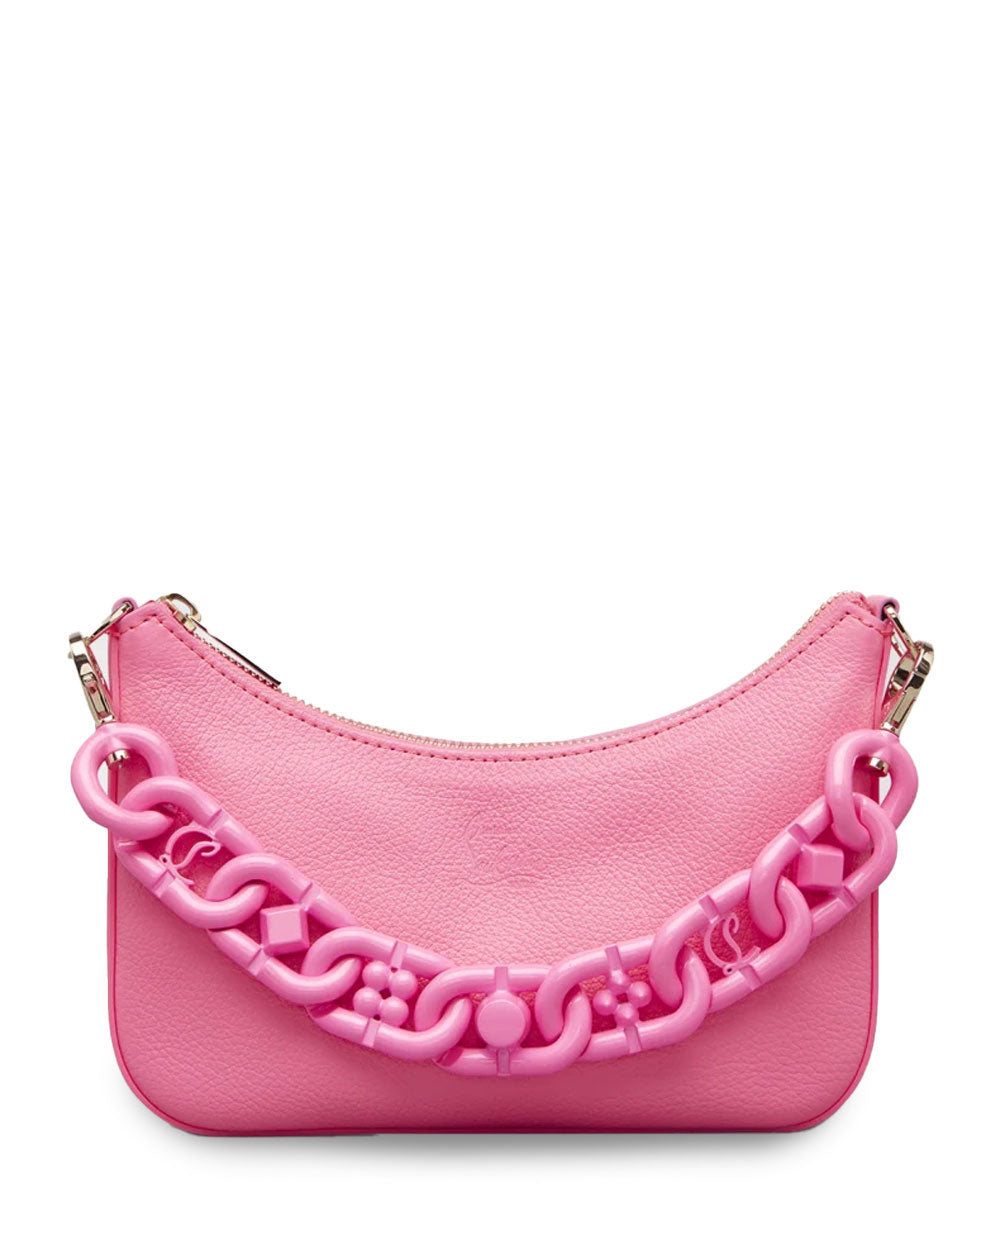 Christian Louboutin Loubila Mini Chain Leather Shoulder Bag in Neon Pink –  Stanley Korshak